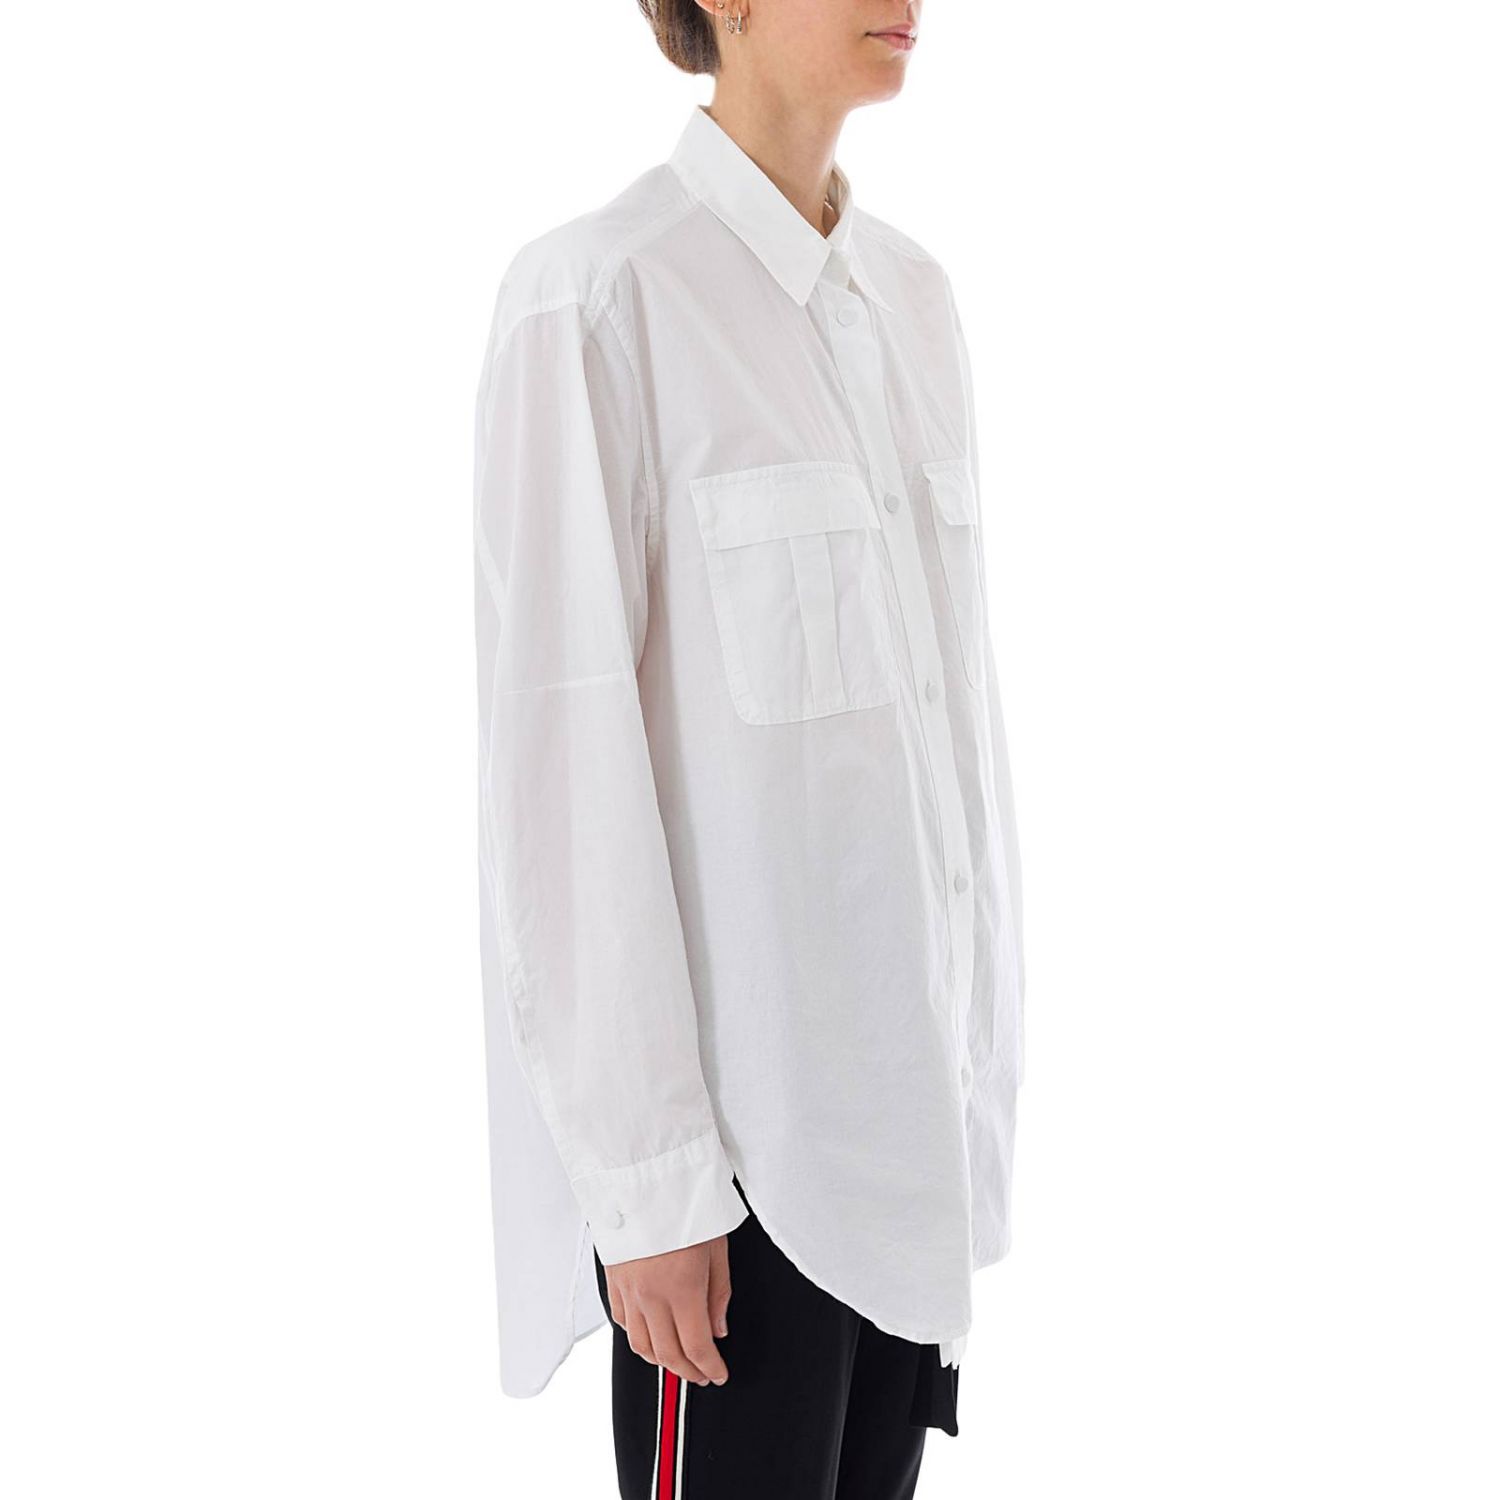 Maison Flaneur Outlet: shirt for woman - White | Maison Flaneur shirt ...